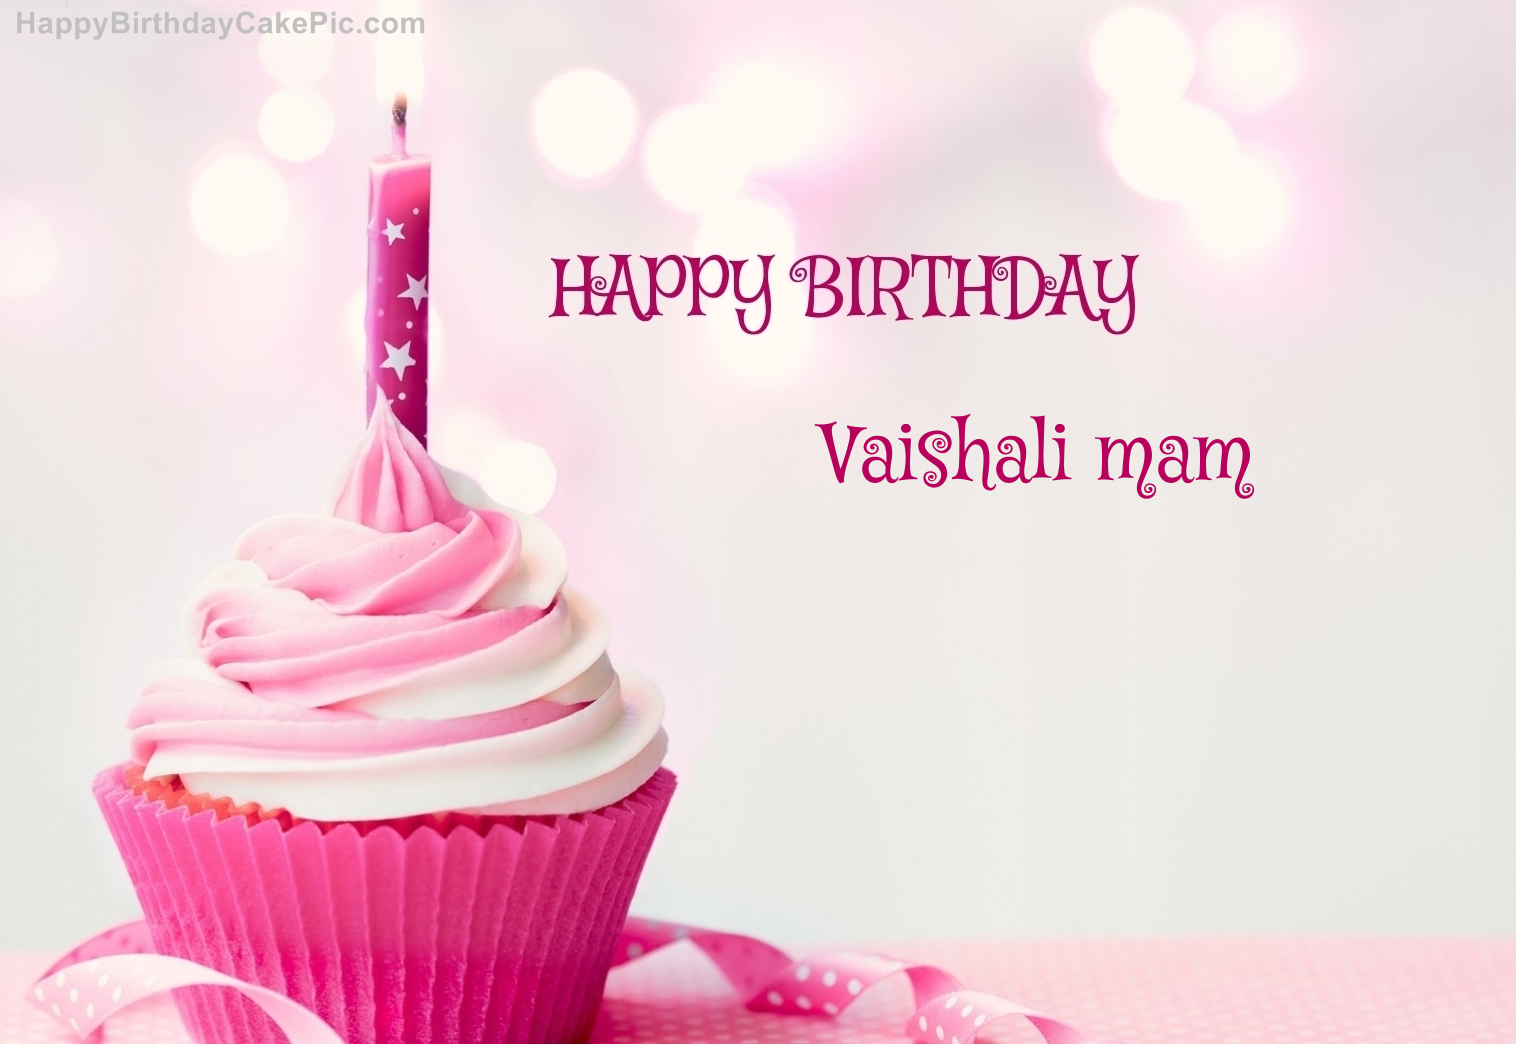 ️ Happy Birthday Cupcake Candle Pink Cake For Vaishali mam